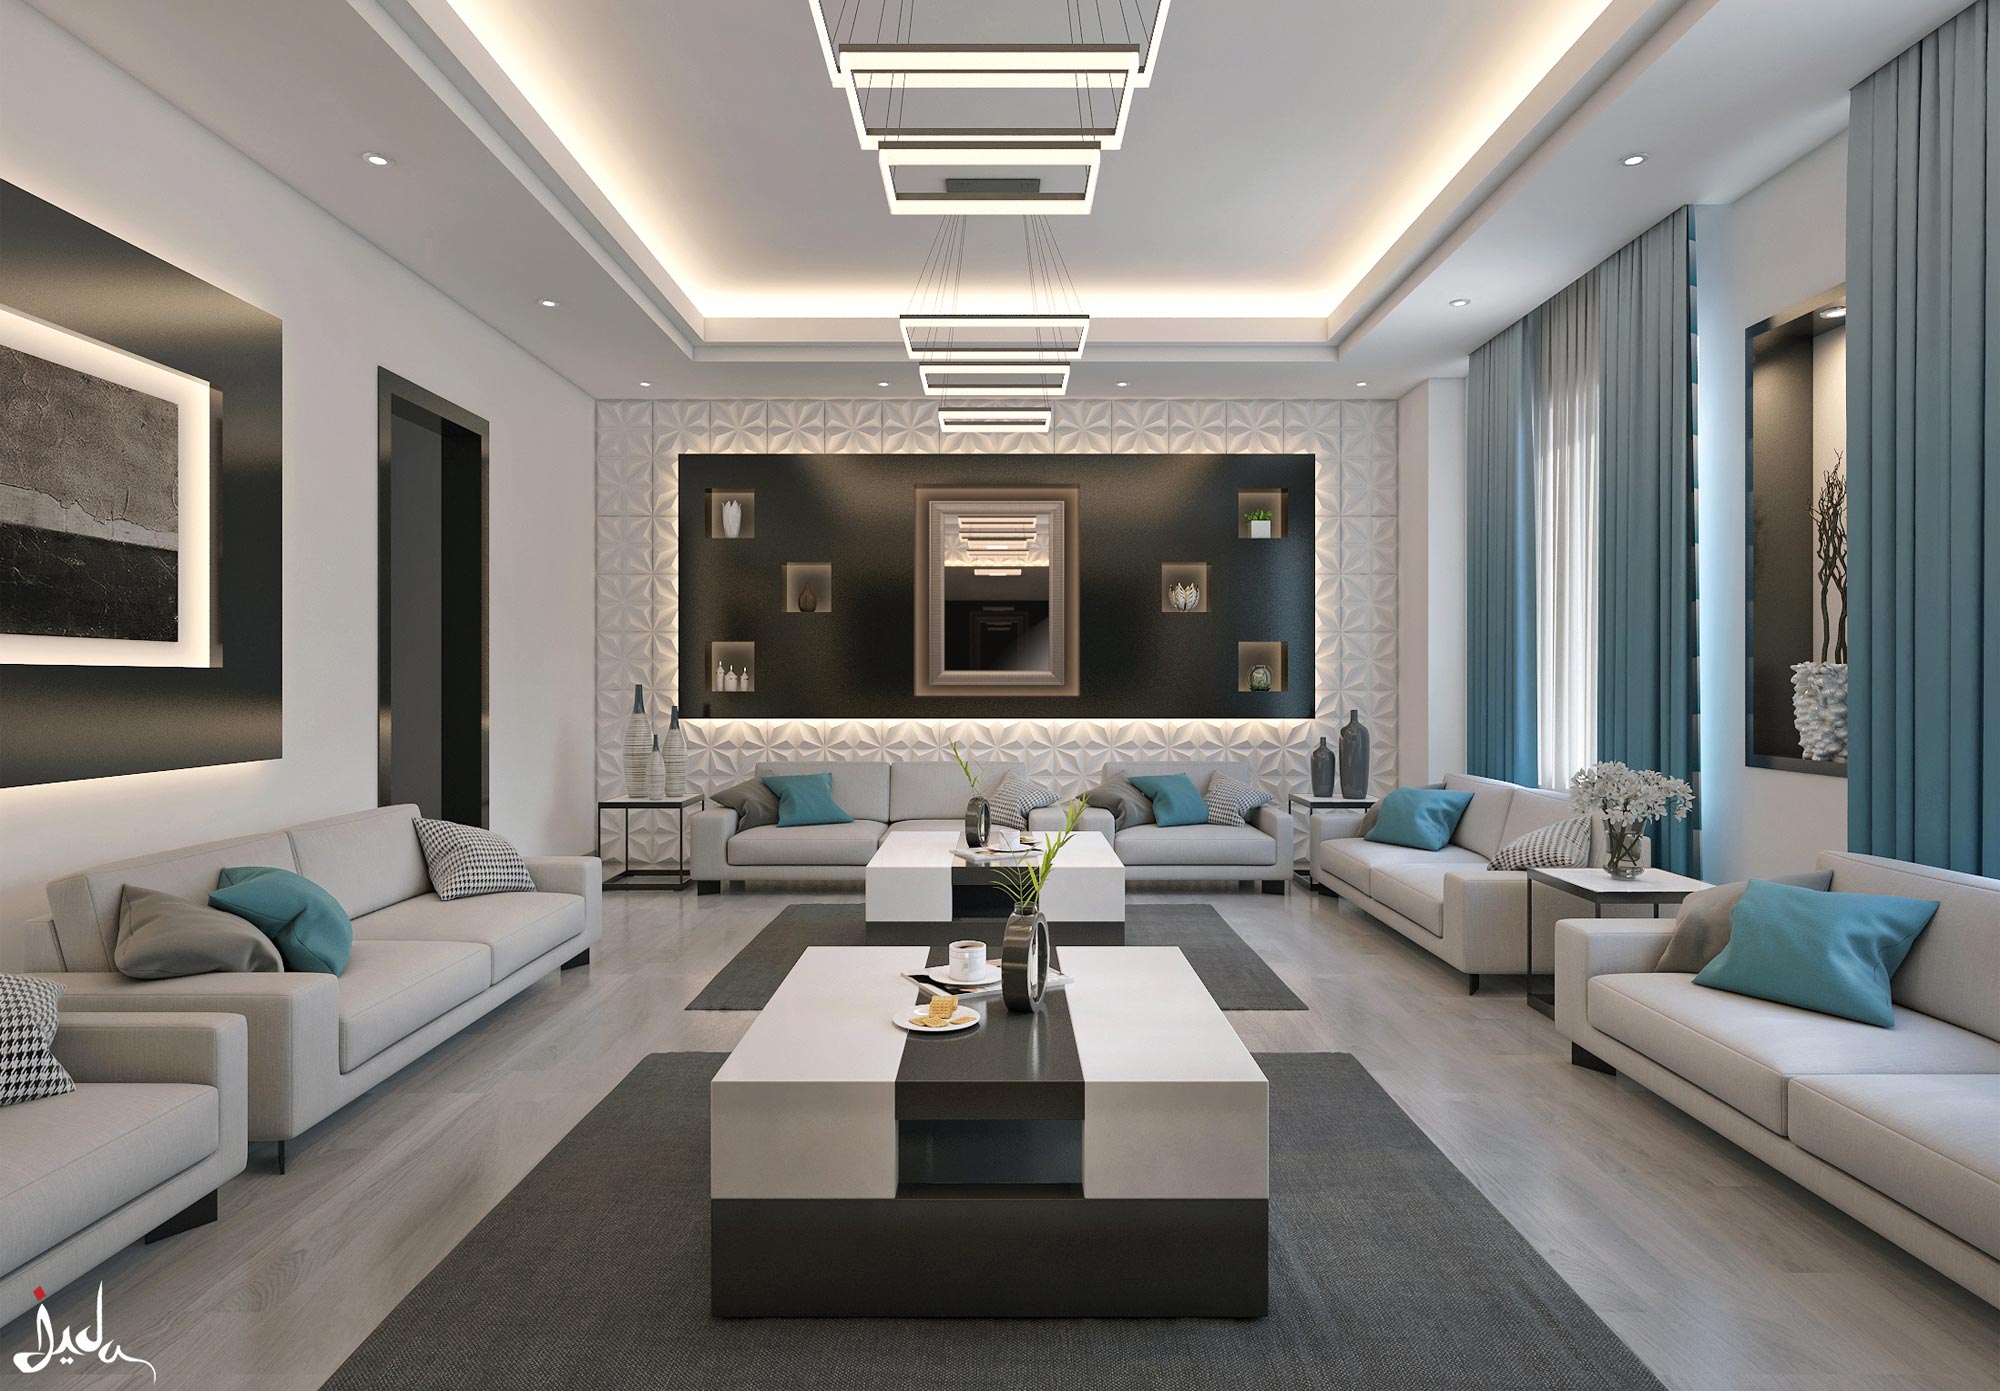 Home - Jeddah Interior Design & Architects